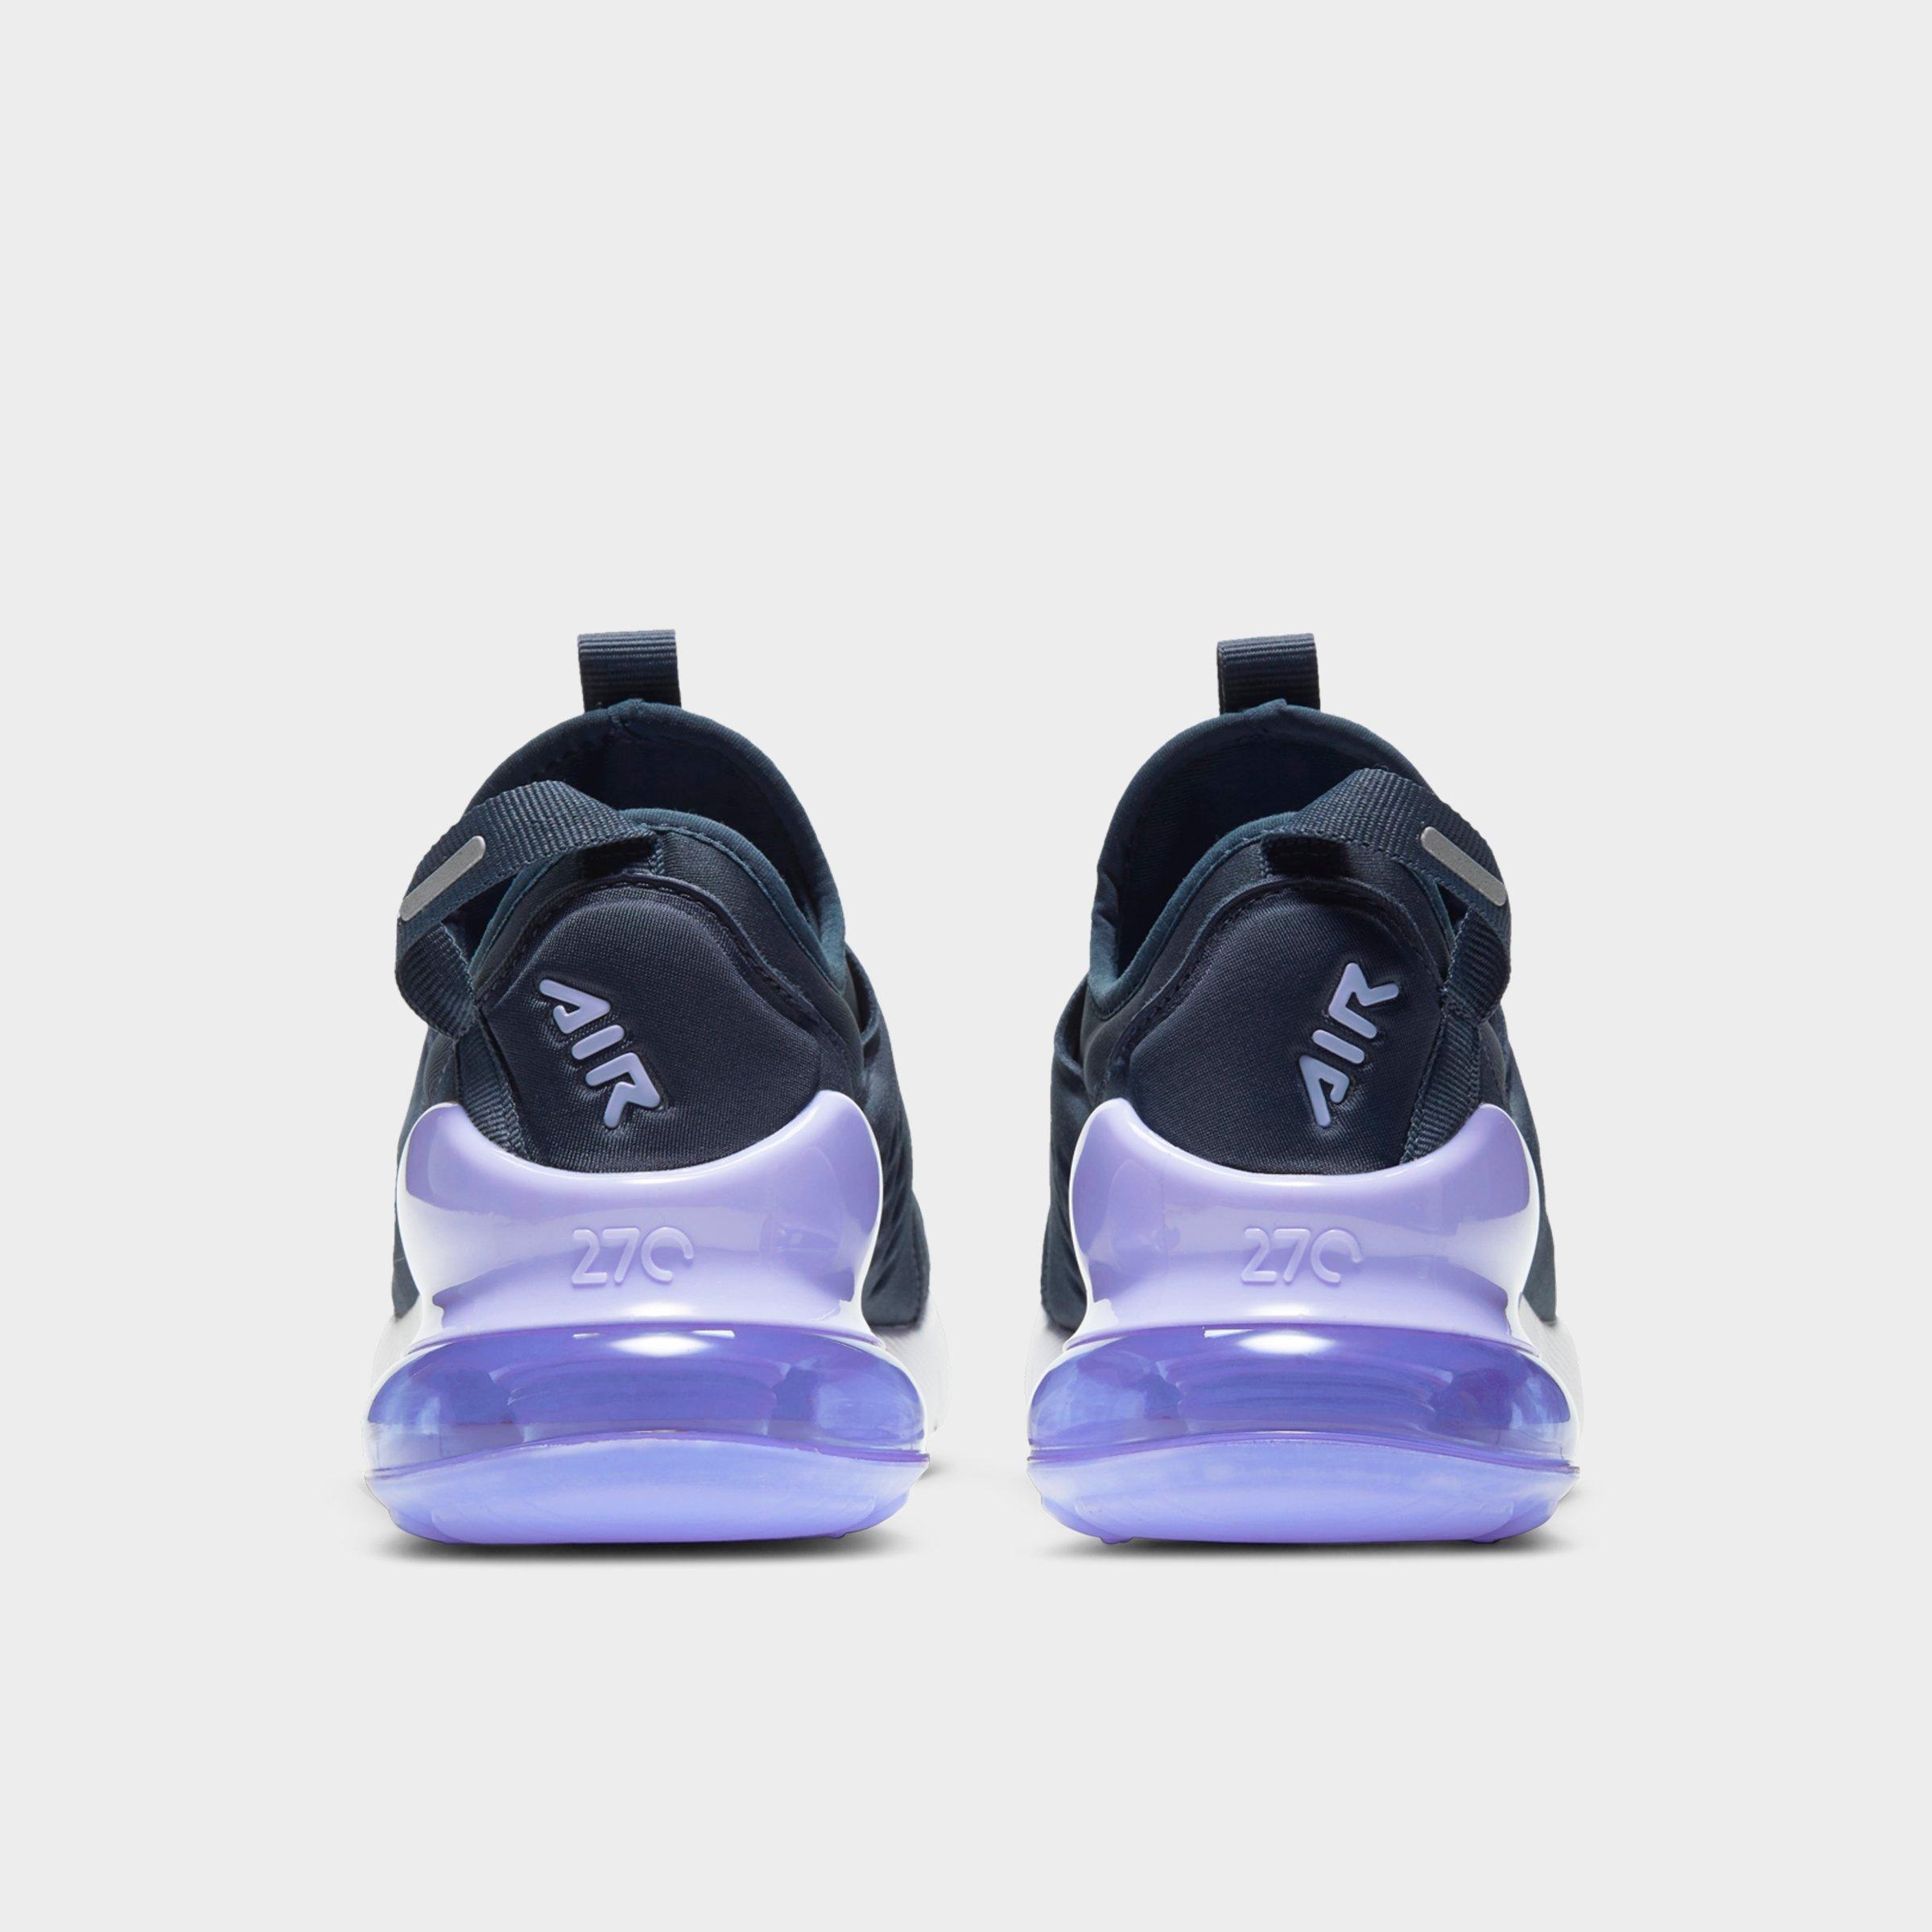 air max 270 purple and black